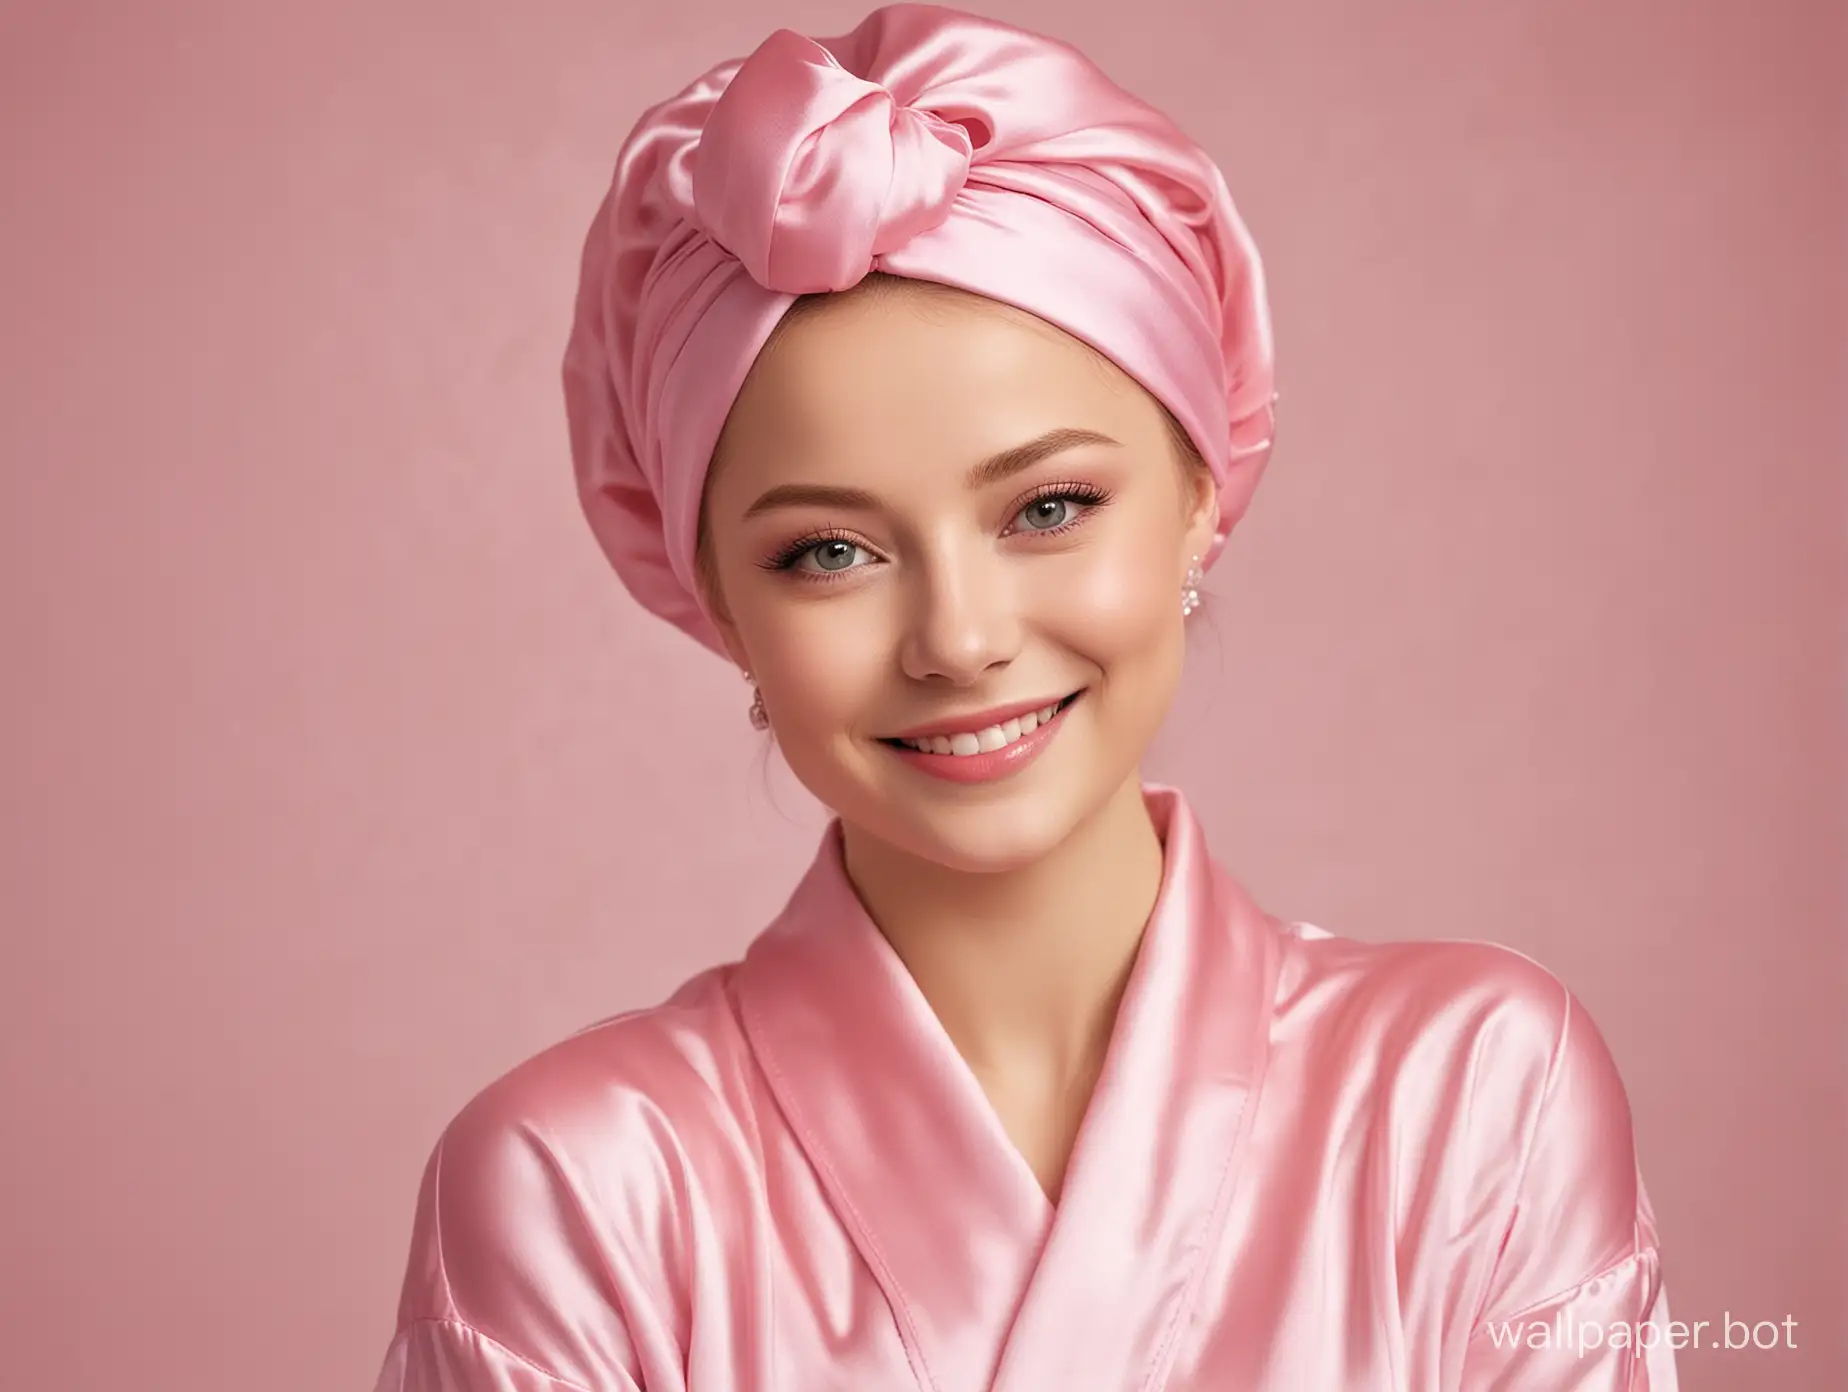 Glamorous-Portrait-of-Young-Queen-Yulia-Lipnitskaya-Smiling-in-Luxurious-Pink-Silk-Robe-and-Turban